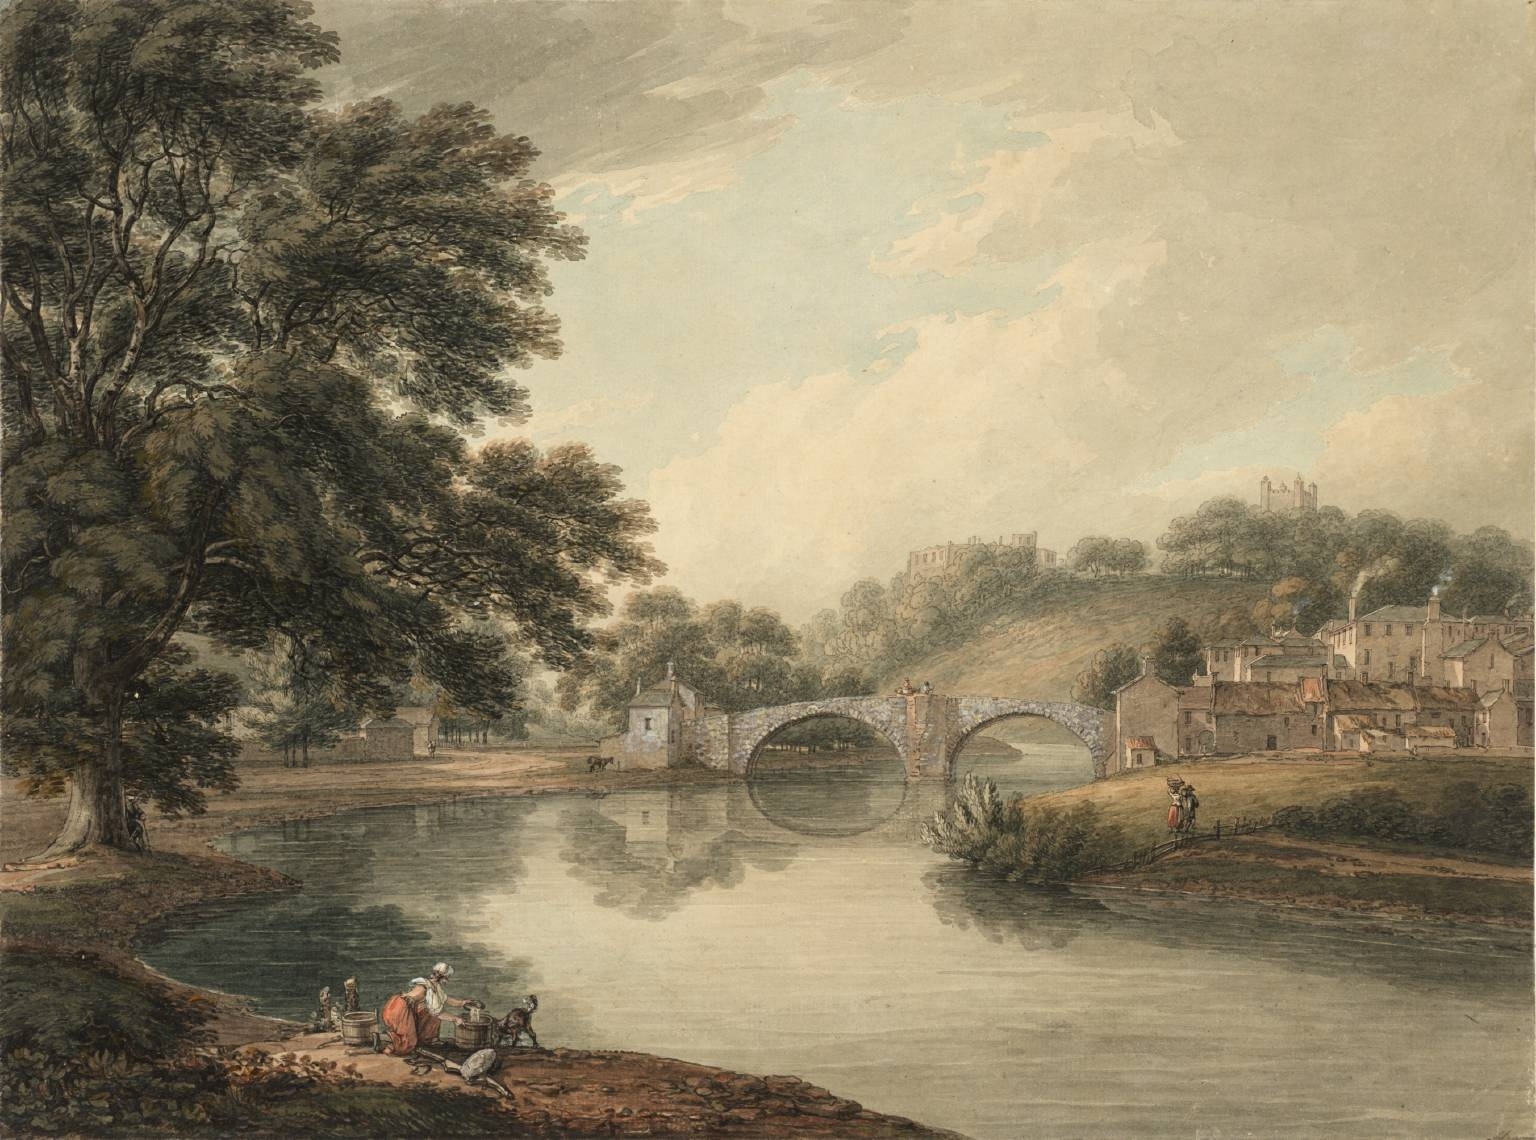 Appleby 1778 by Thomas Hearne 1744-1817